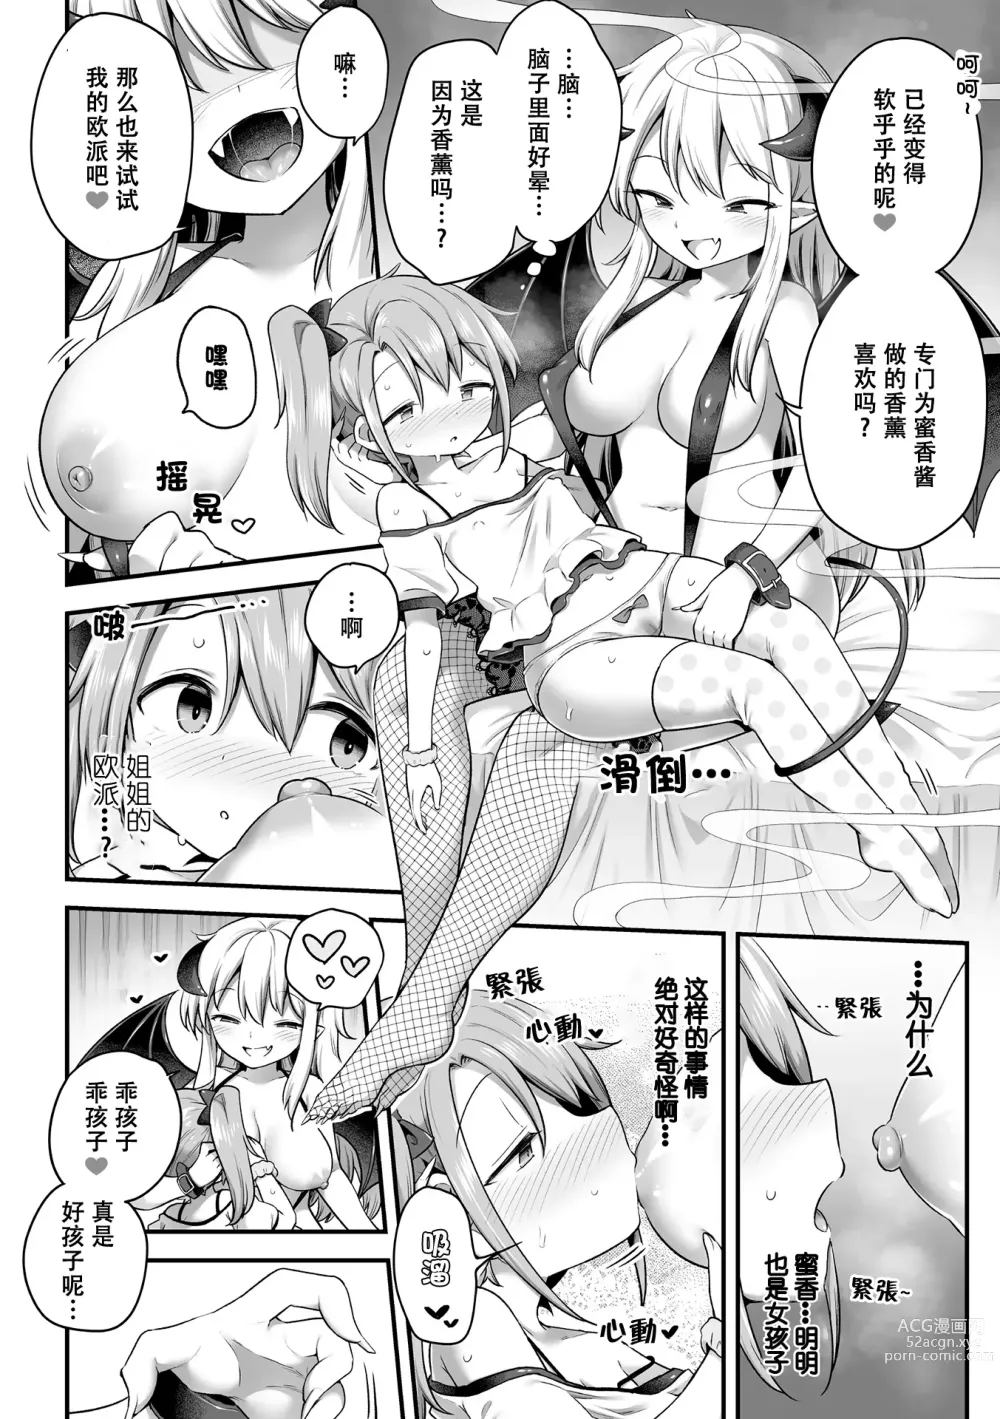 Page 12 of manga 2D Comic Magazine Succubus Yuri H Vol. 1